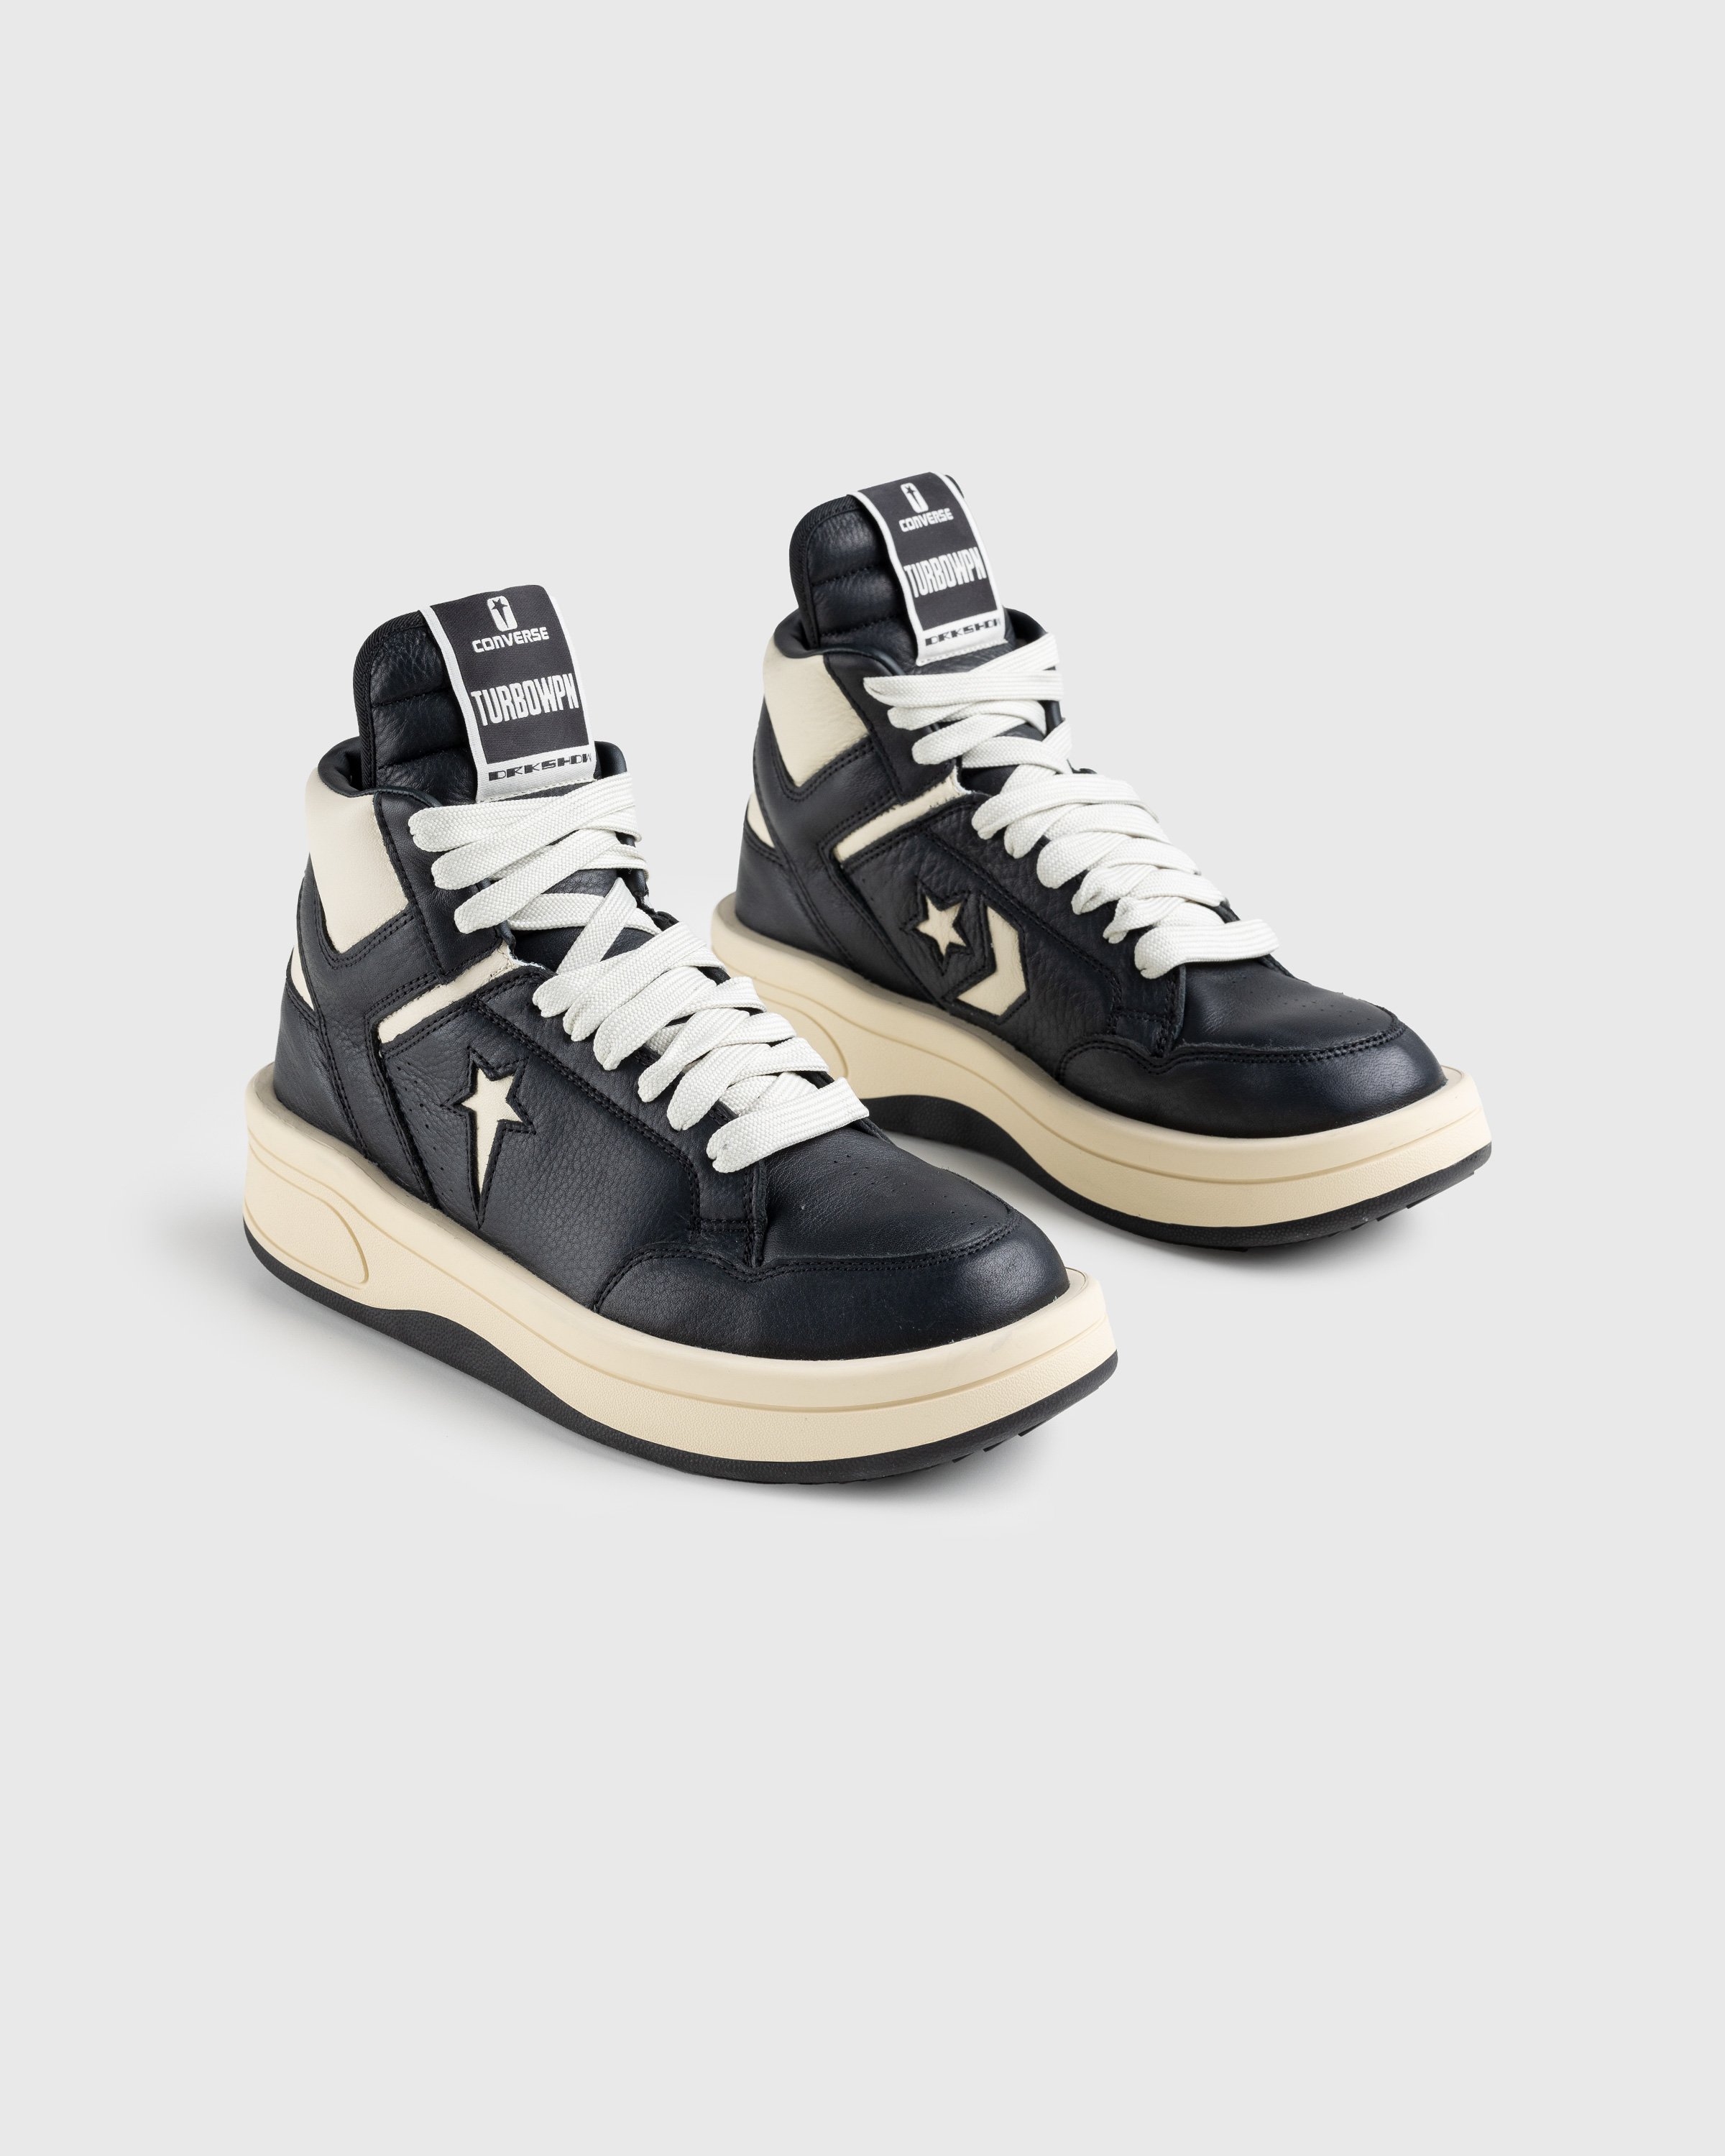 Converse x DRKSHDW - TURBOWPN Black/Cream/Egret - Footwear - Black - Image 3